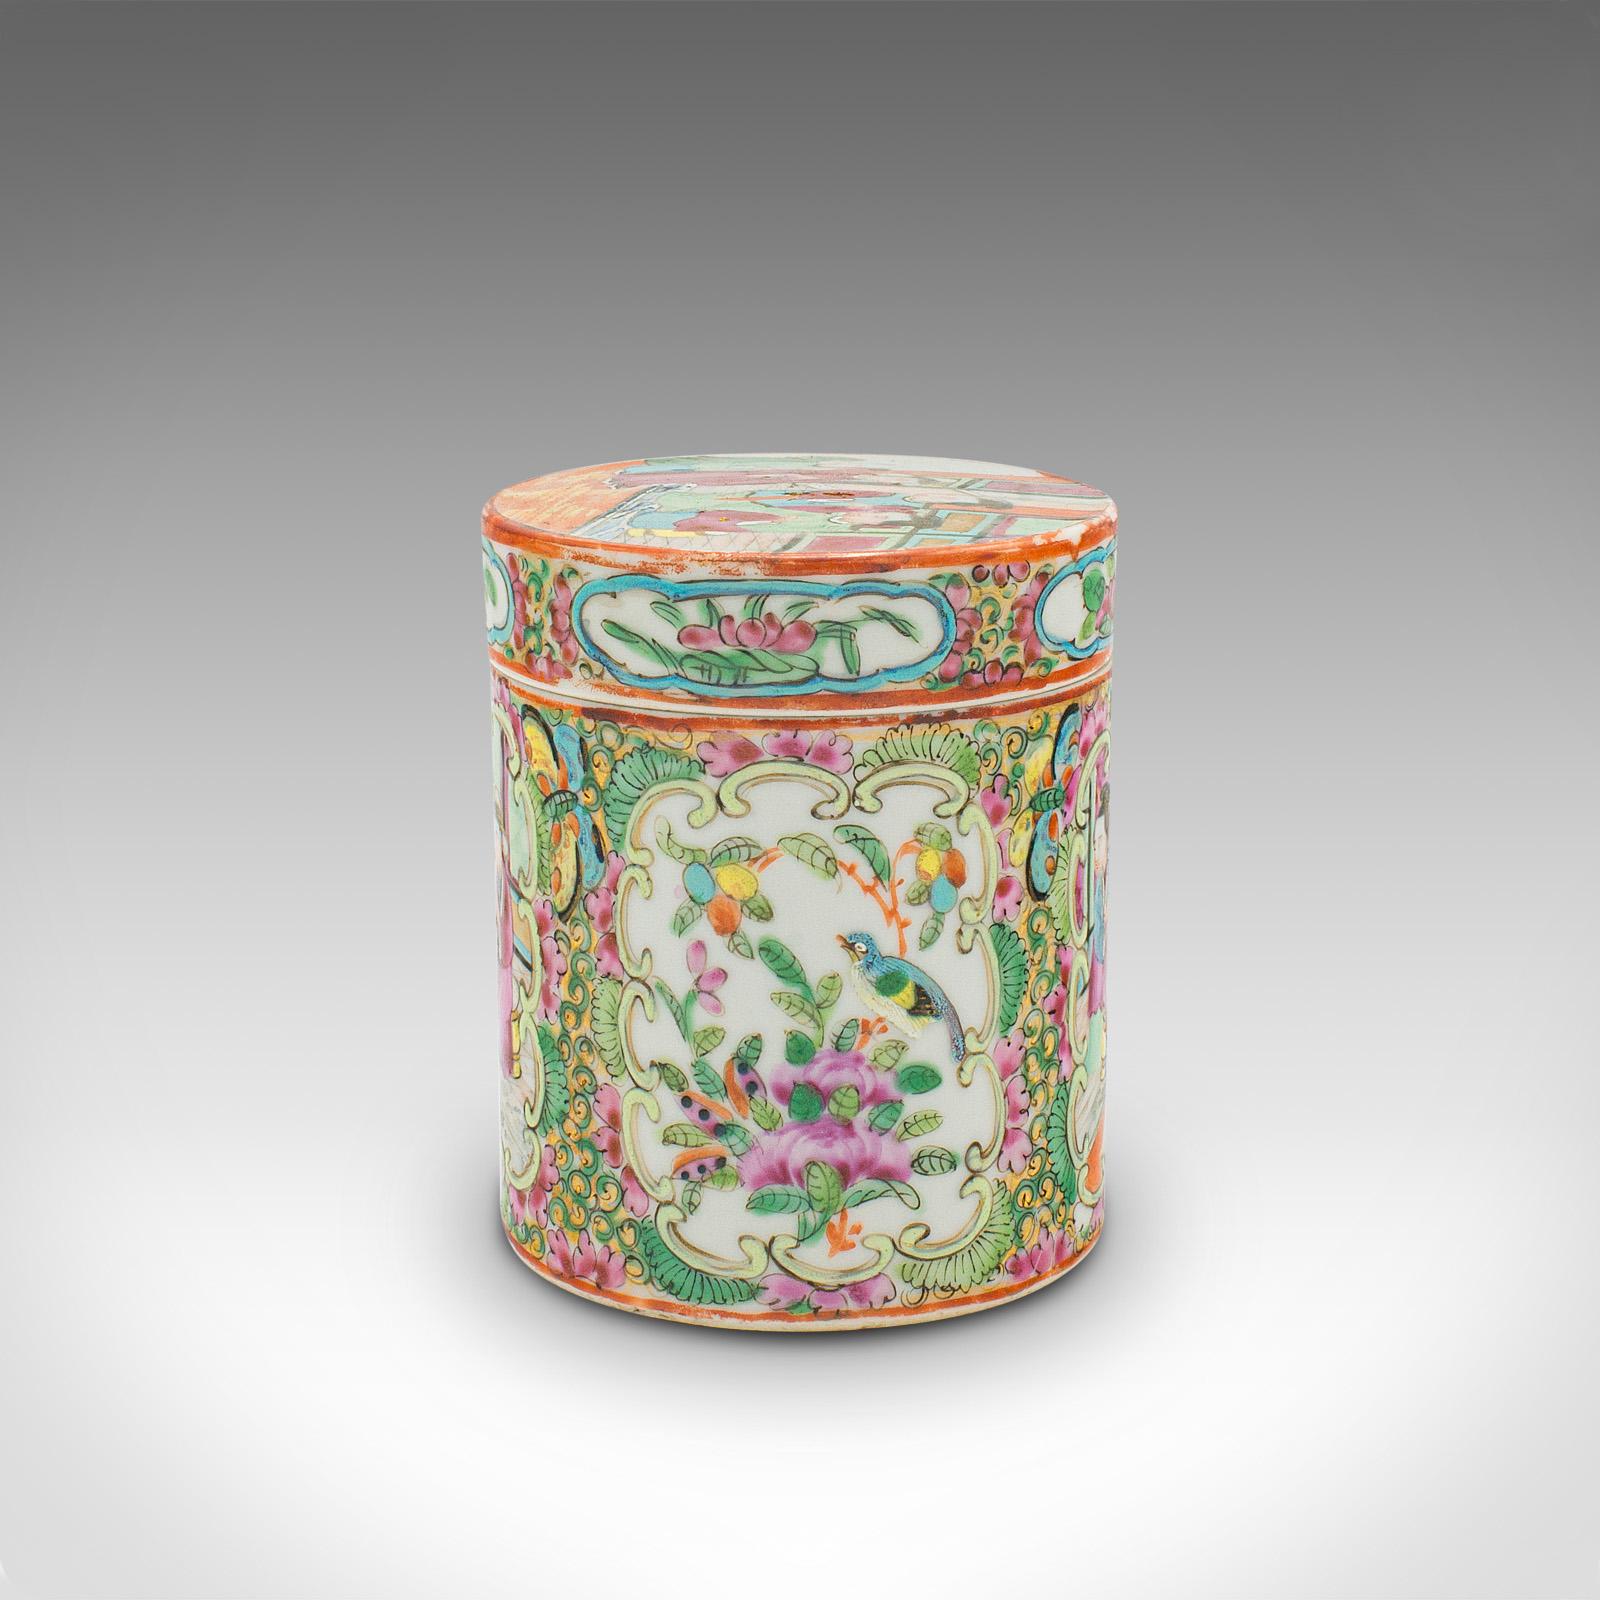 Small Antique Famille Rose Spice Jar, Chinese Ceramic, Decorative Pot, Victorian 1